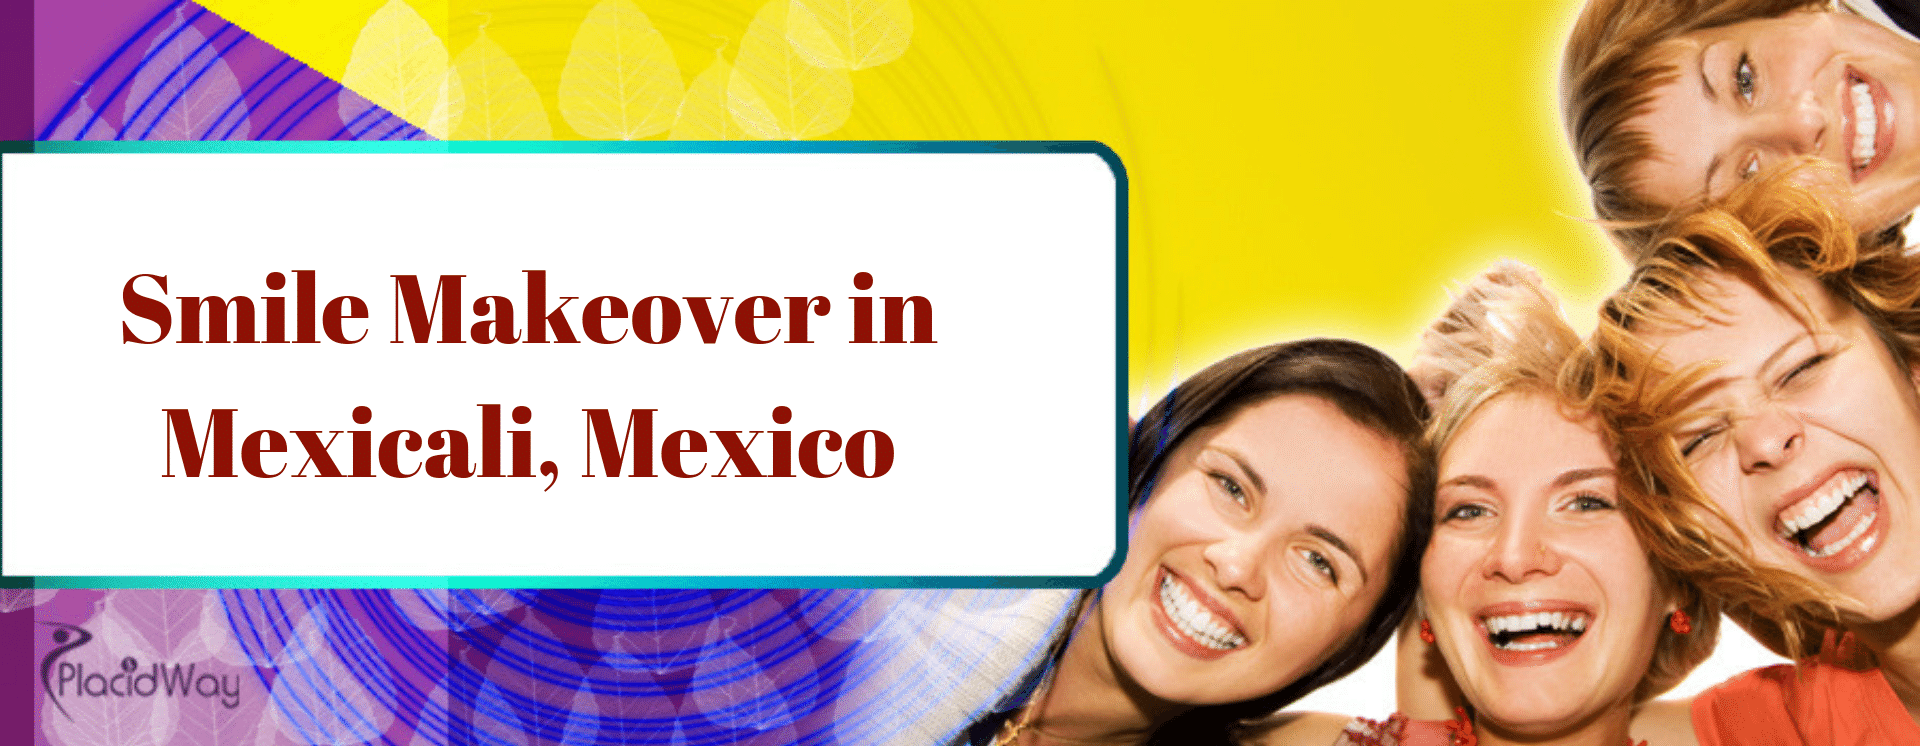 Smile Makeover (Mexicali, Mexico)